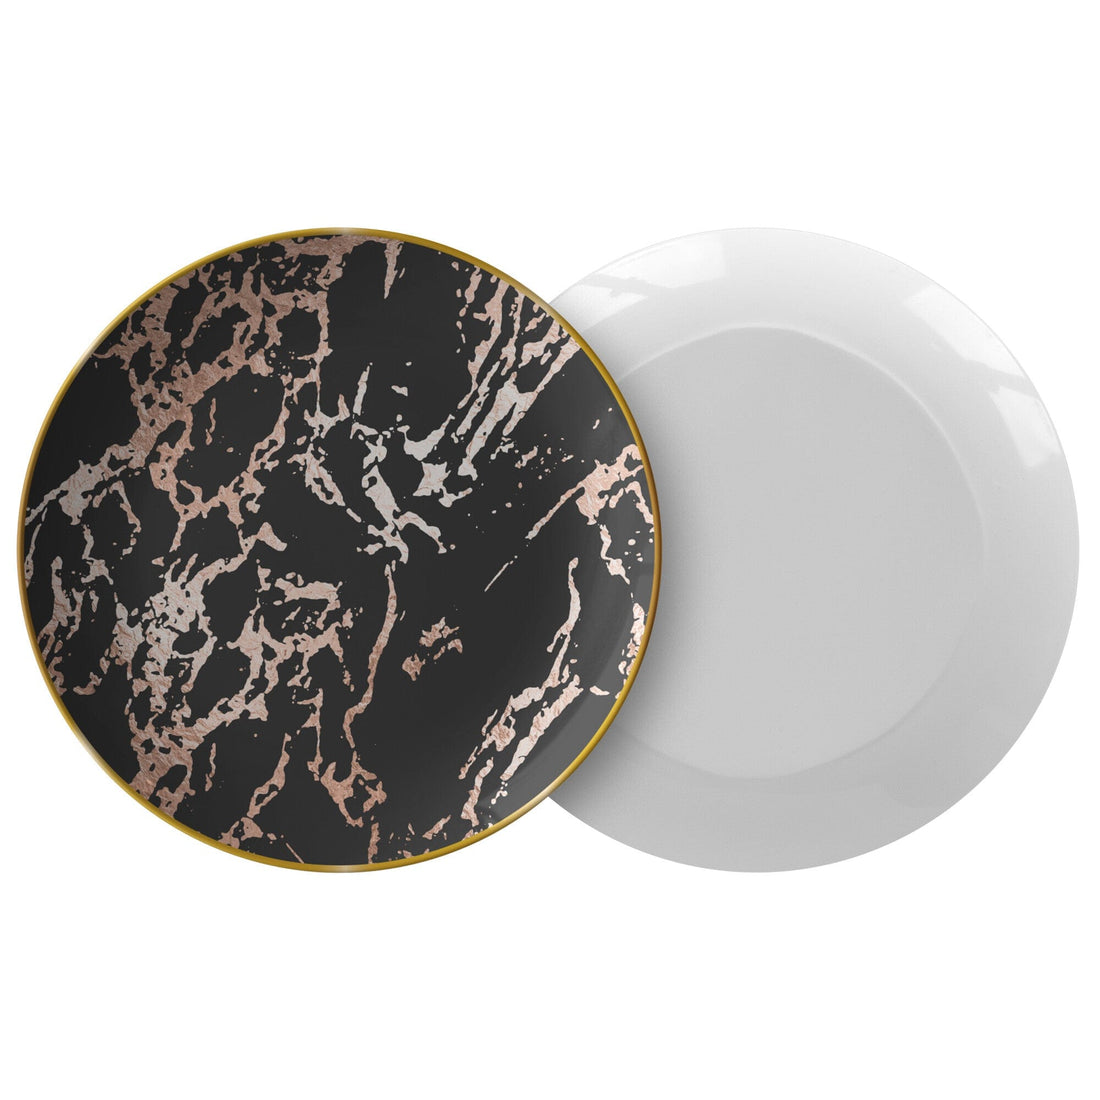 Kate McEnroe New York Marble Dinner Plate in Black Blush with Gold RimPlatesP20 - GRM - MAR - 33S